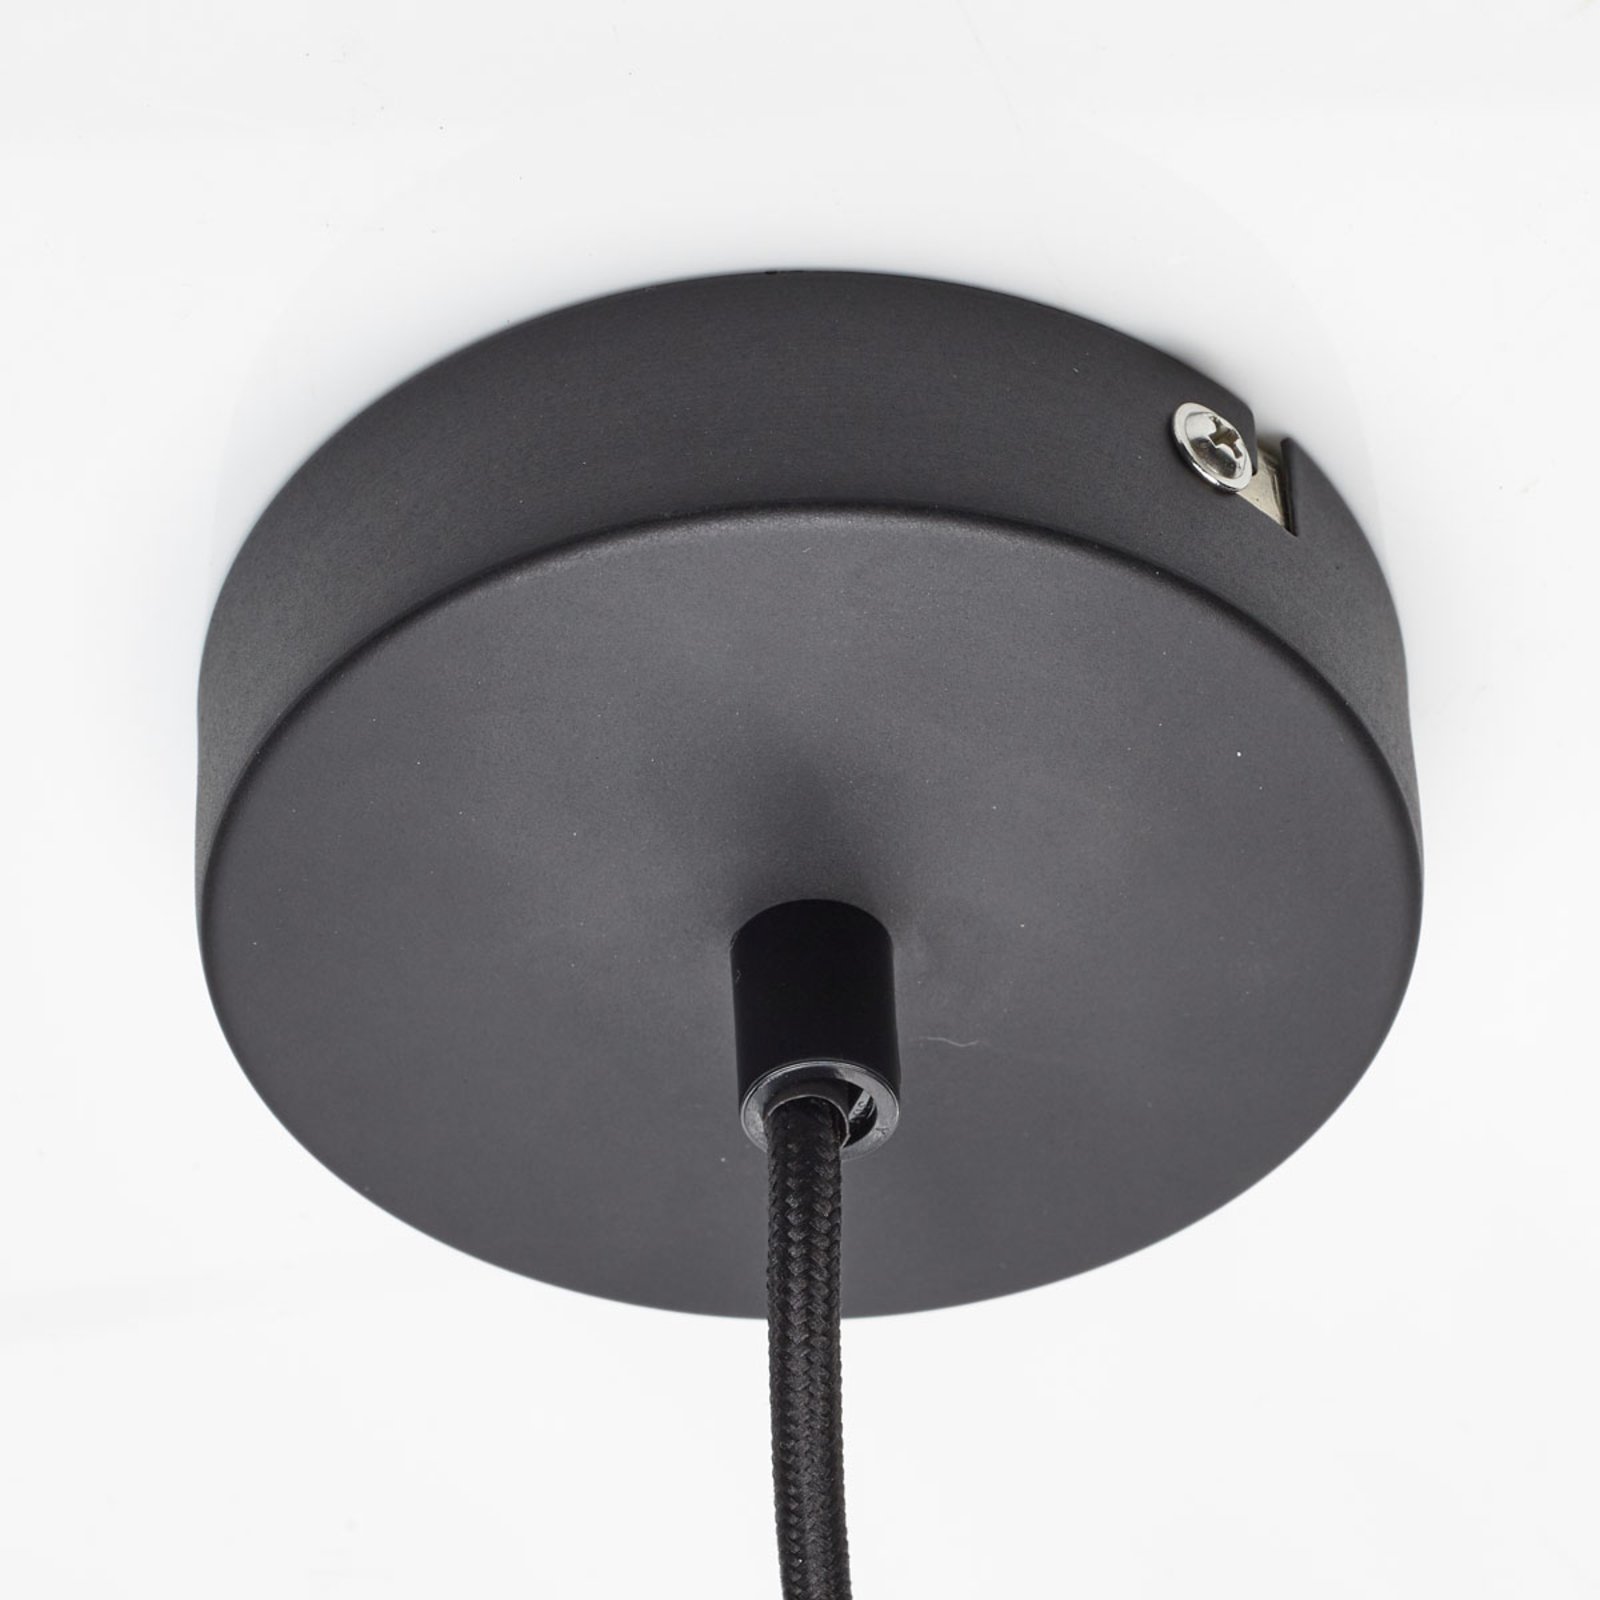 Paulmann Embla viseća lampa u crnoj boji